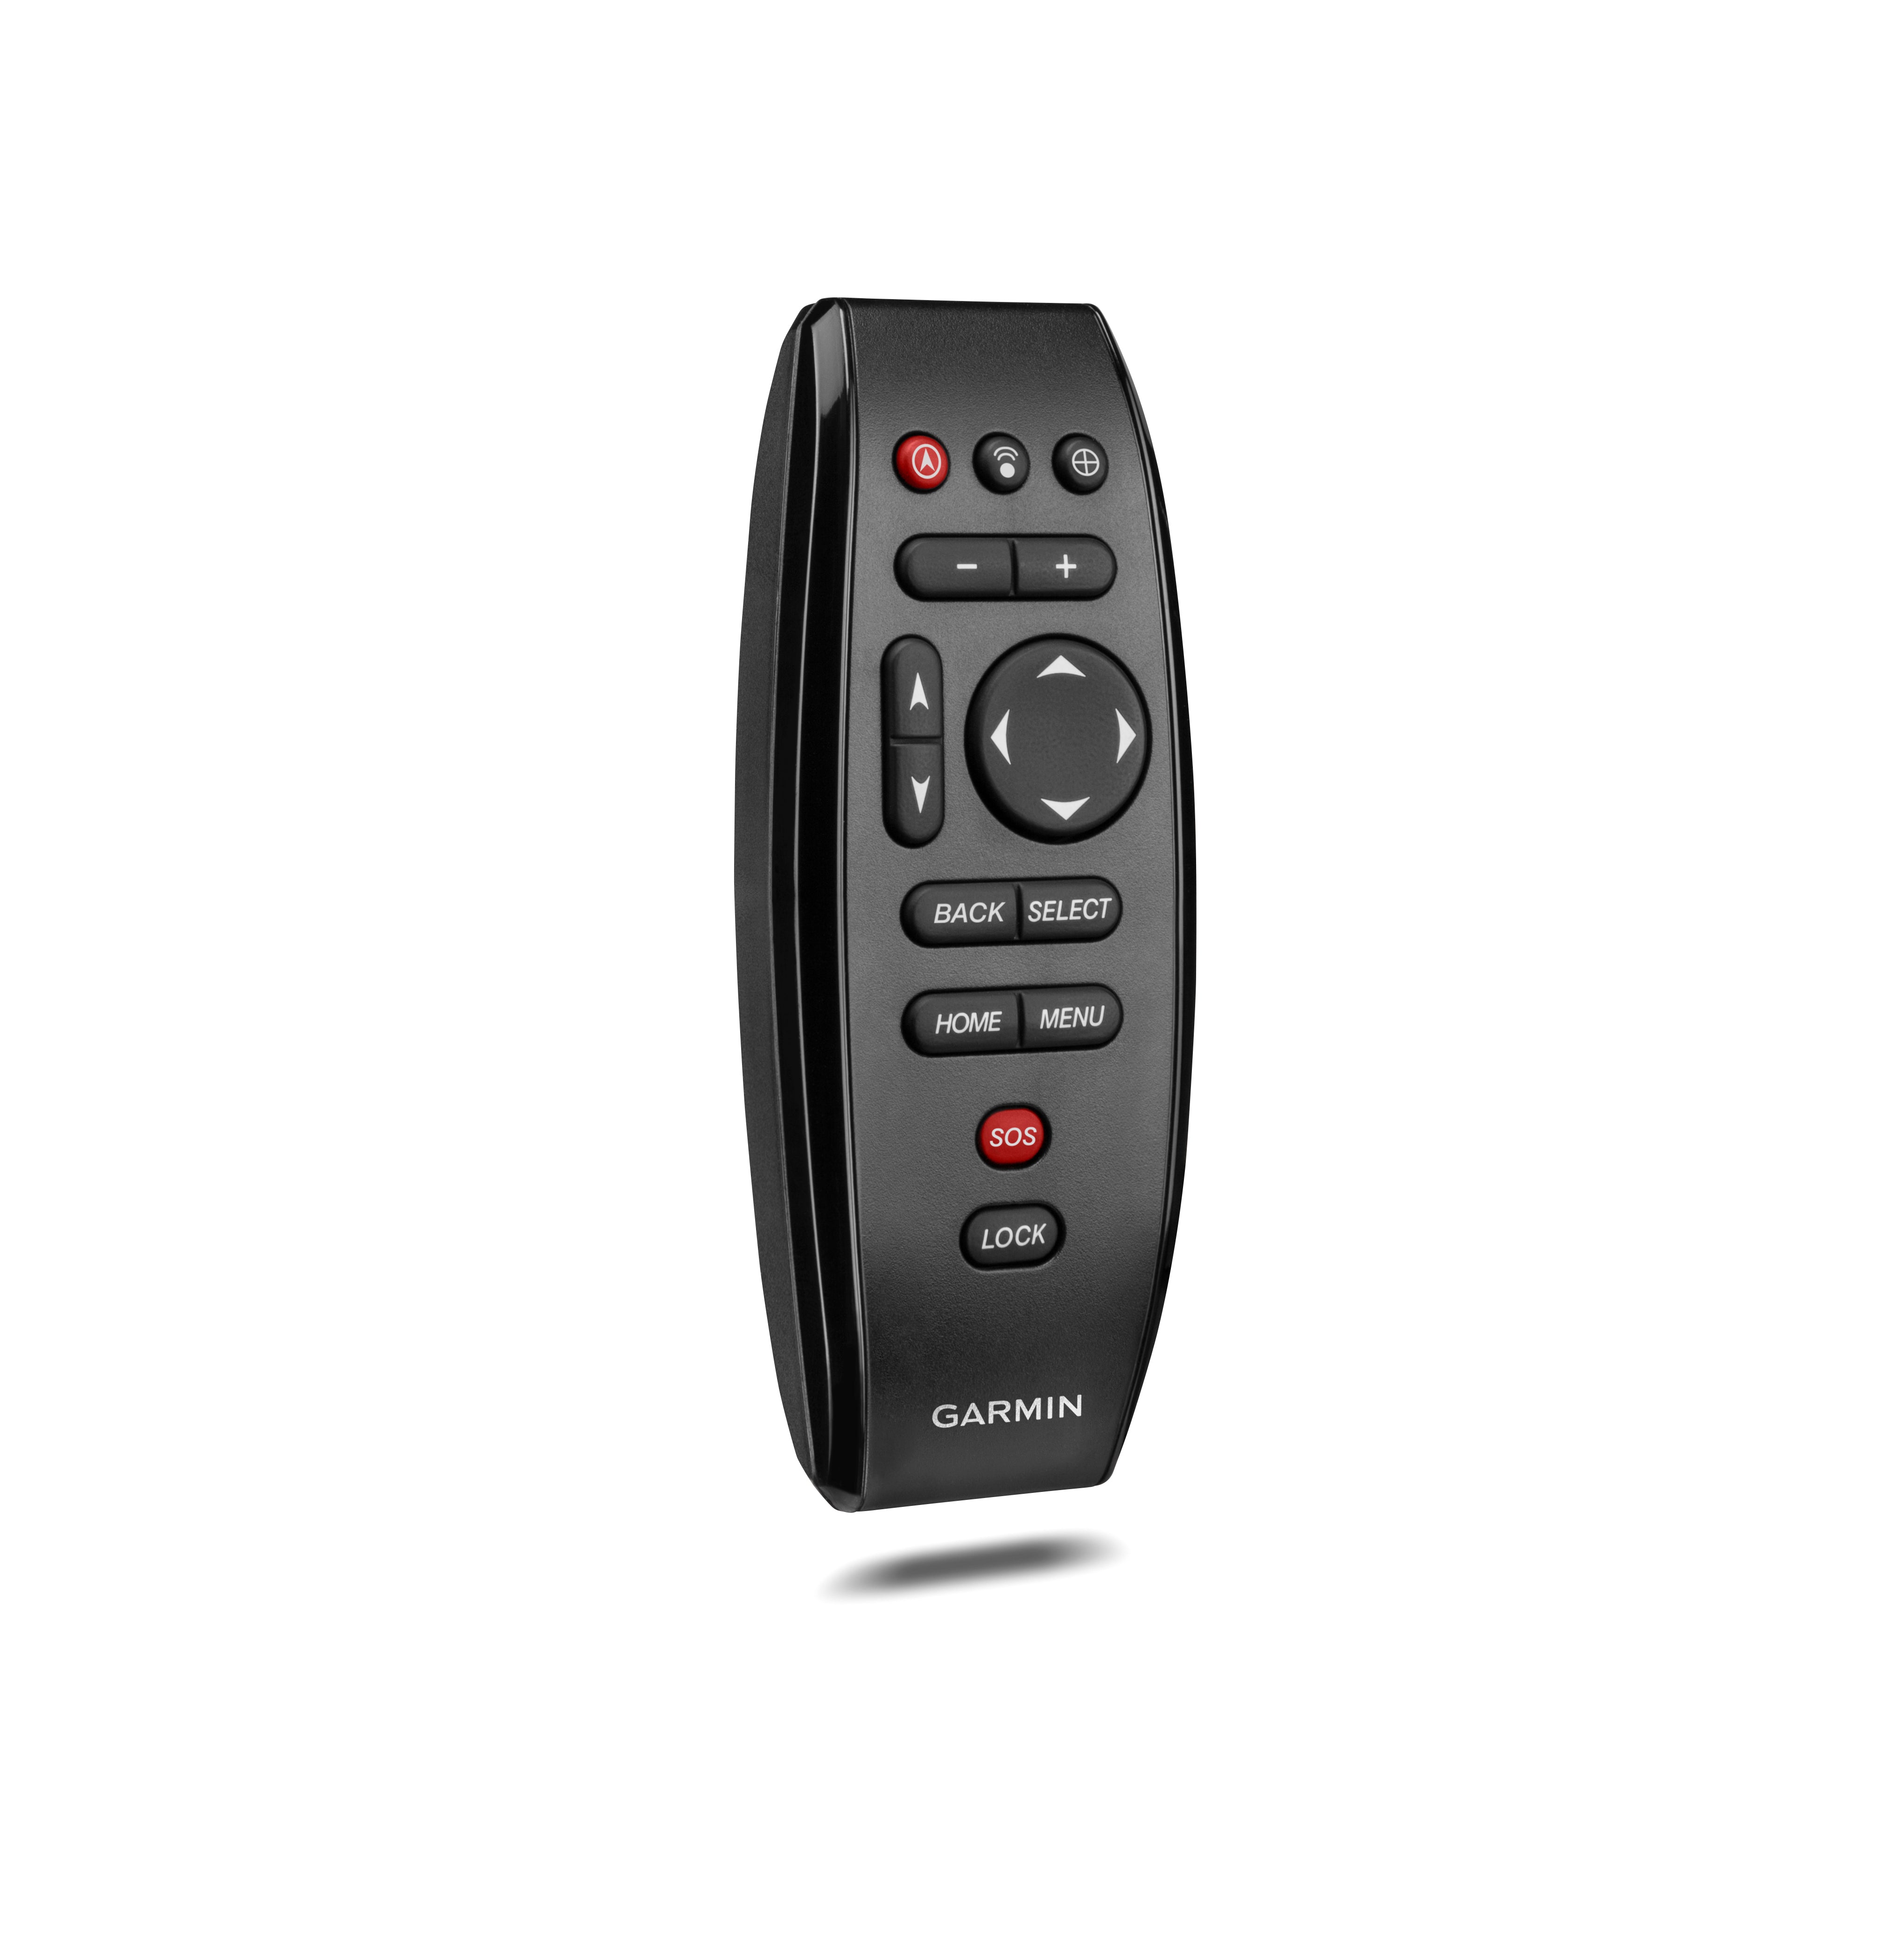 Garmin Wireless Remote Control (GPSMAP® series)